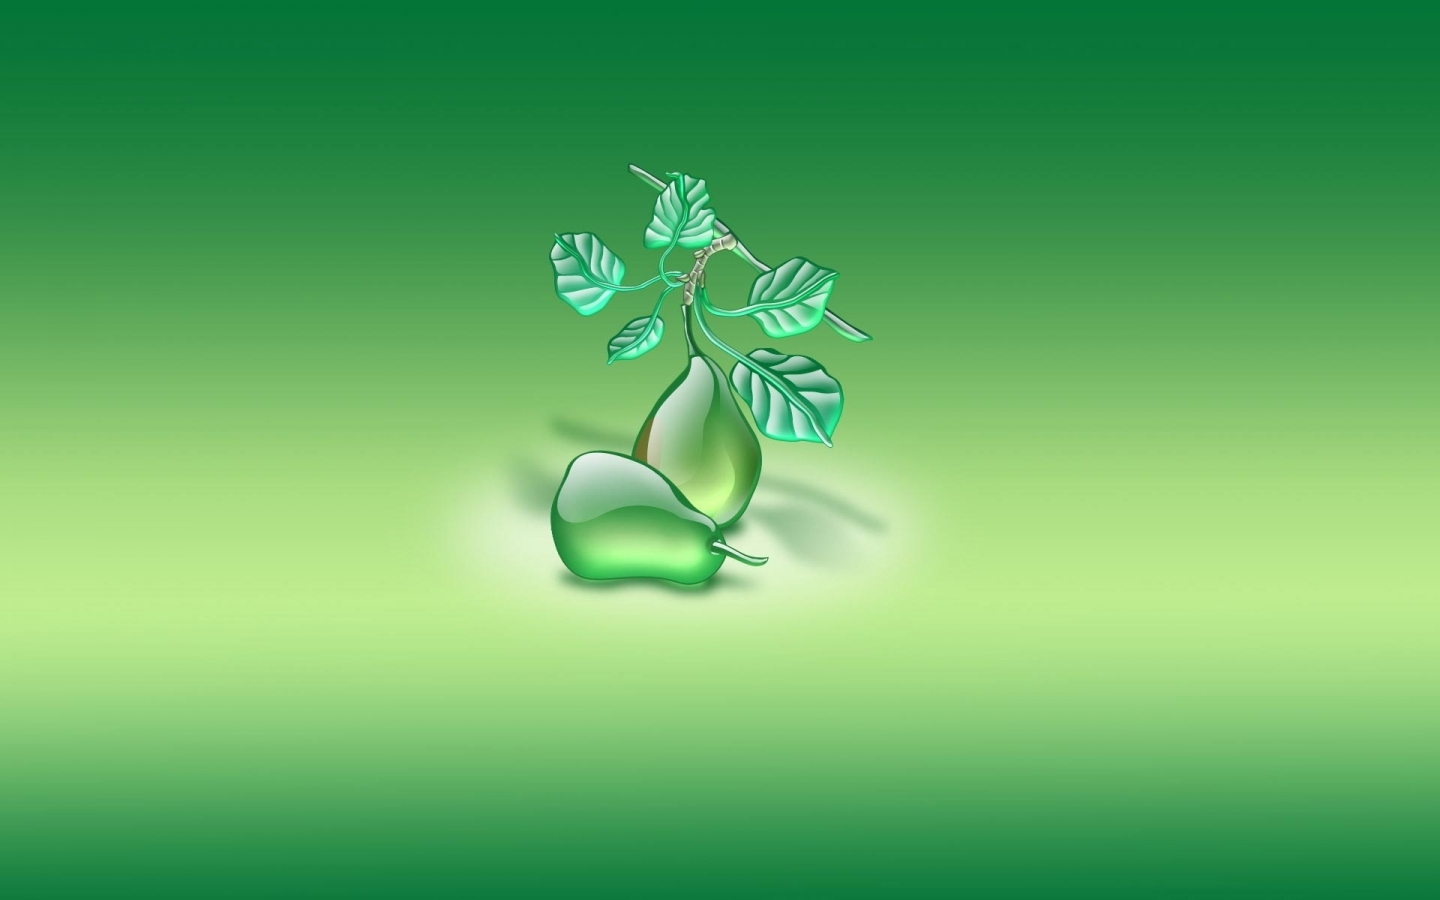 Aqua Peers Green for 1440 x 900 widescreen resolution